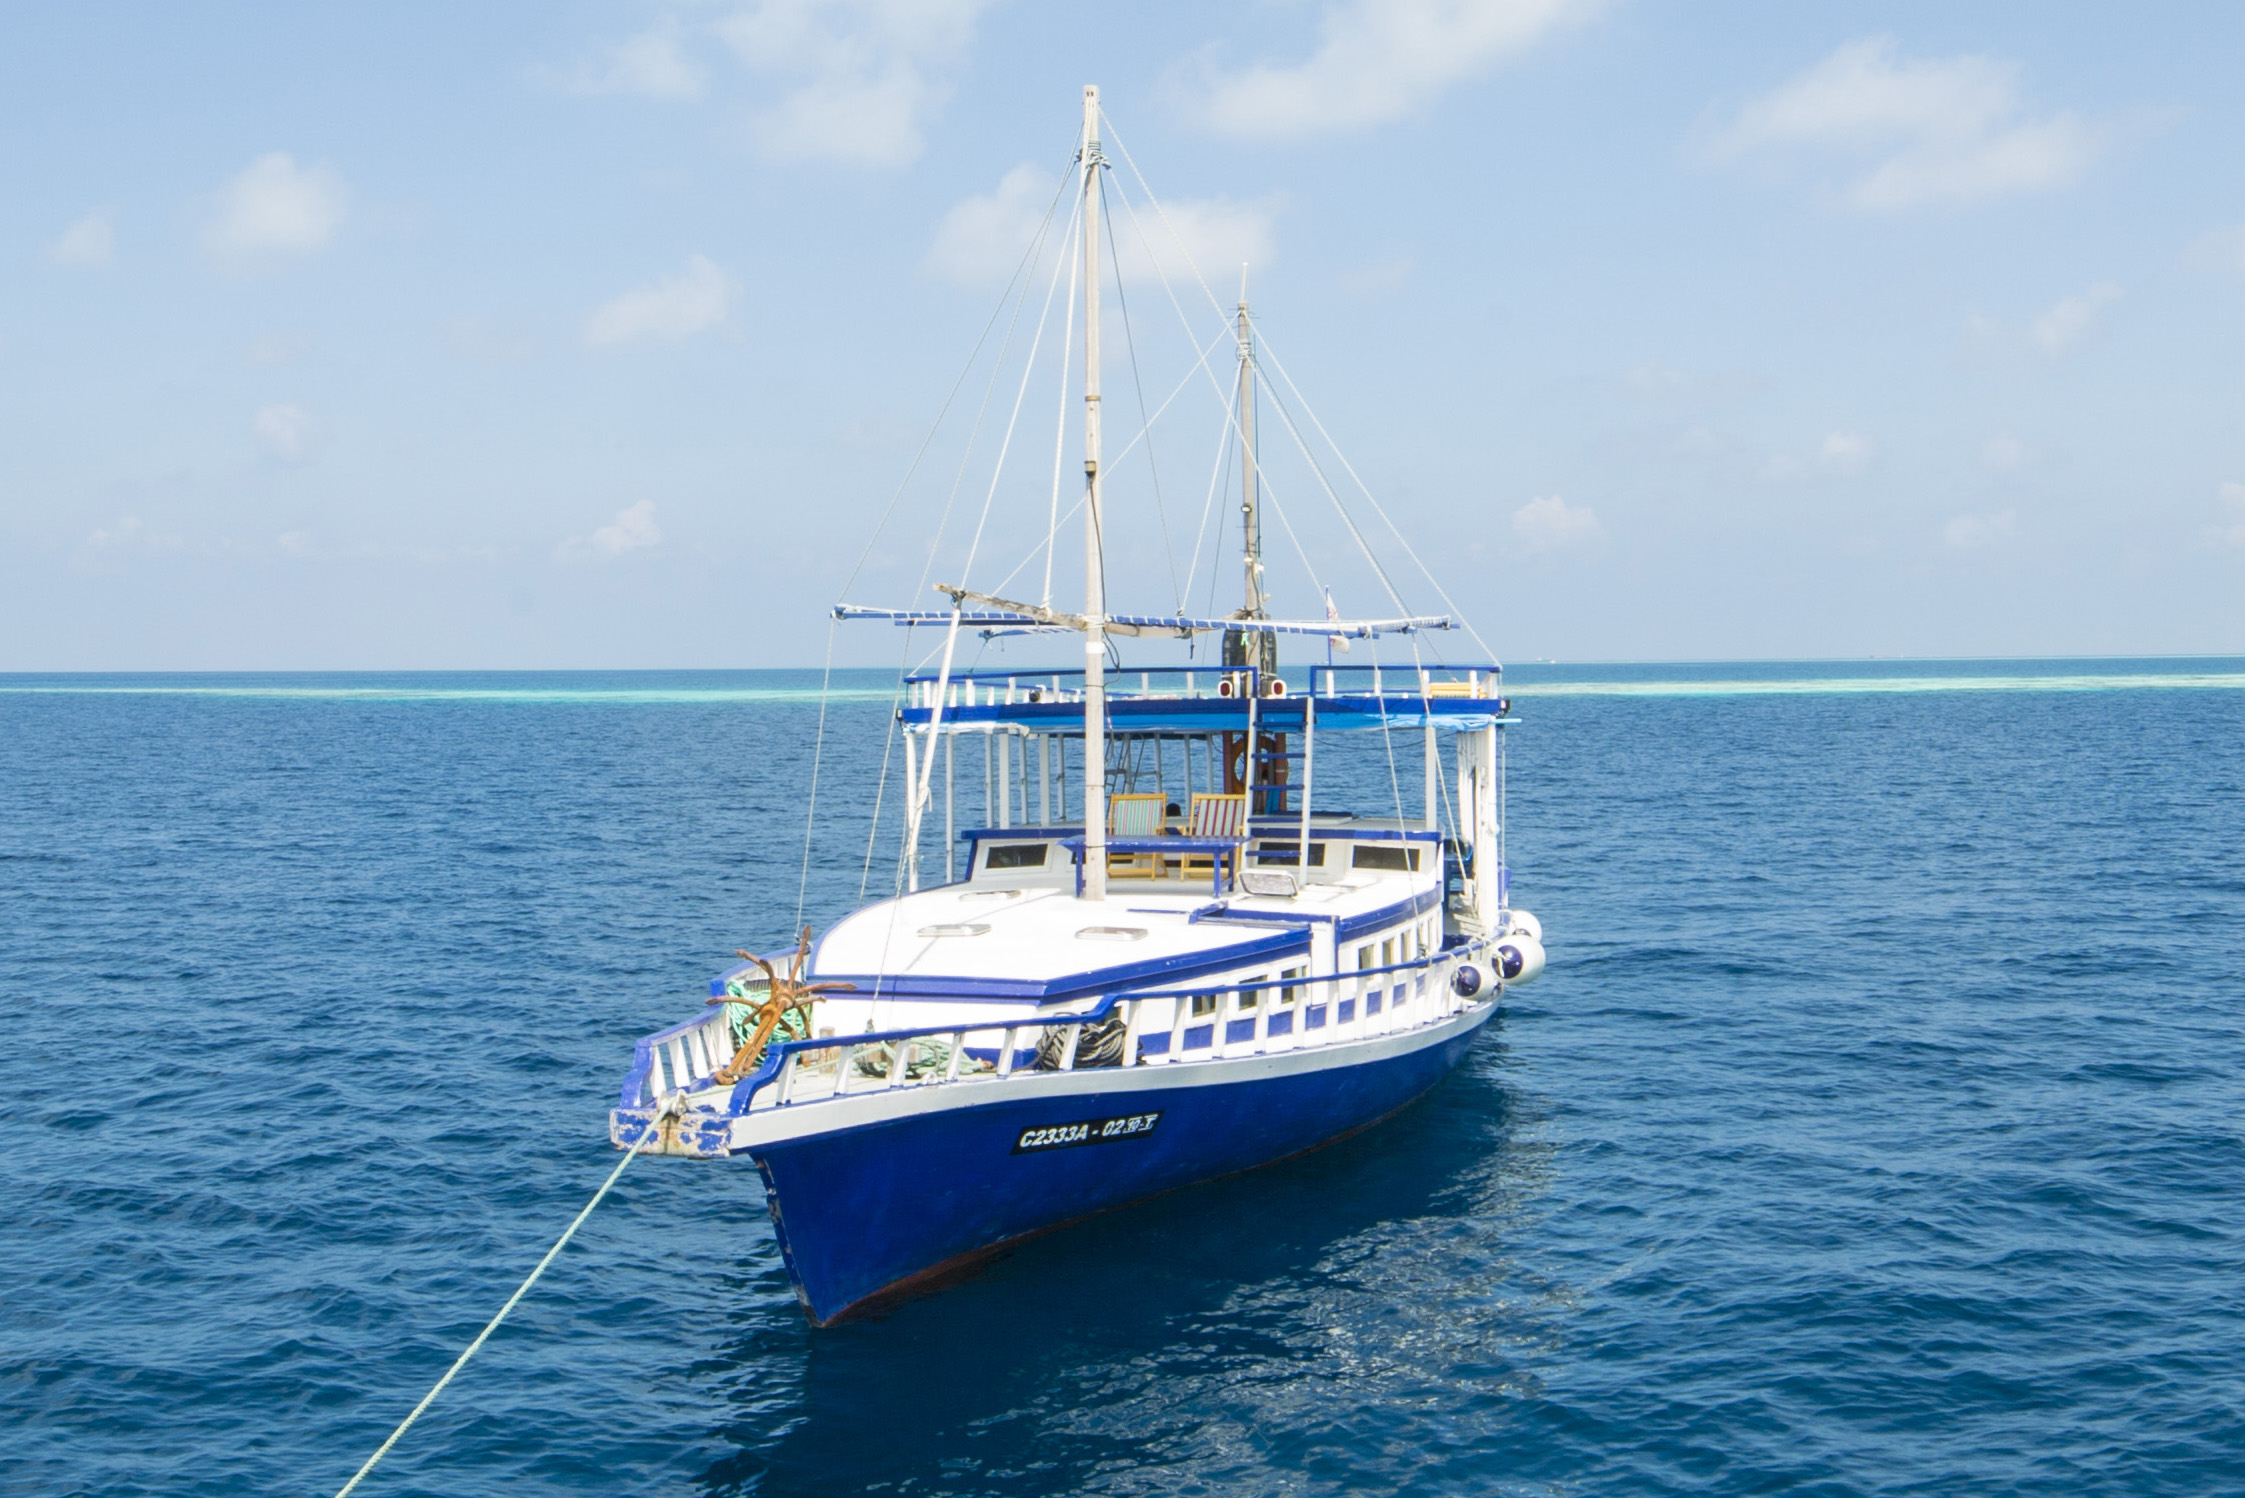 Sea Coral Surf Charter in the Maldives